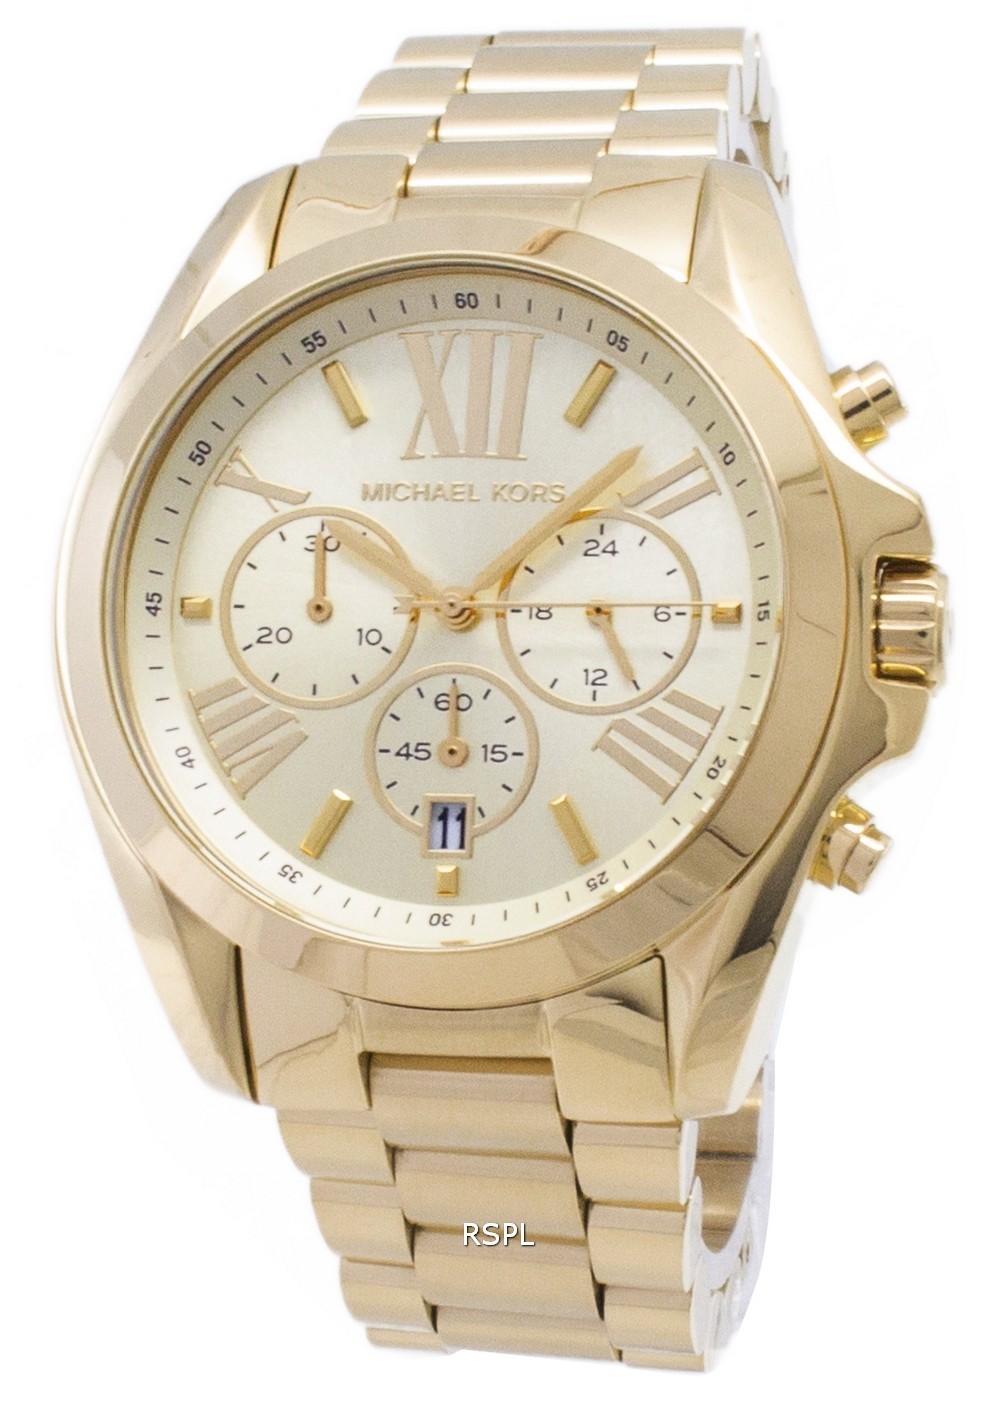 Michael Kors Bradshaw Chronograph Gold-Tone MK5605 Unisex Watch | eBay